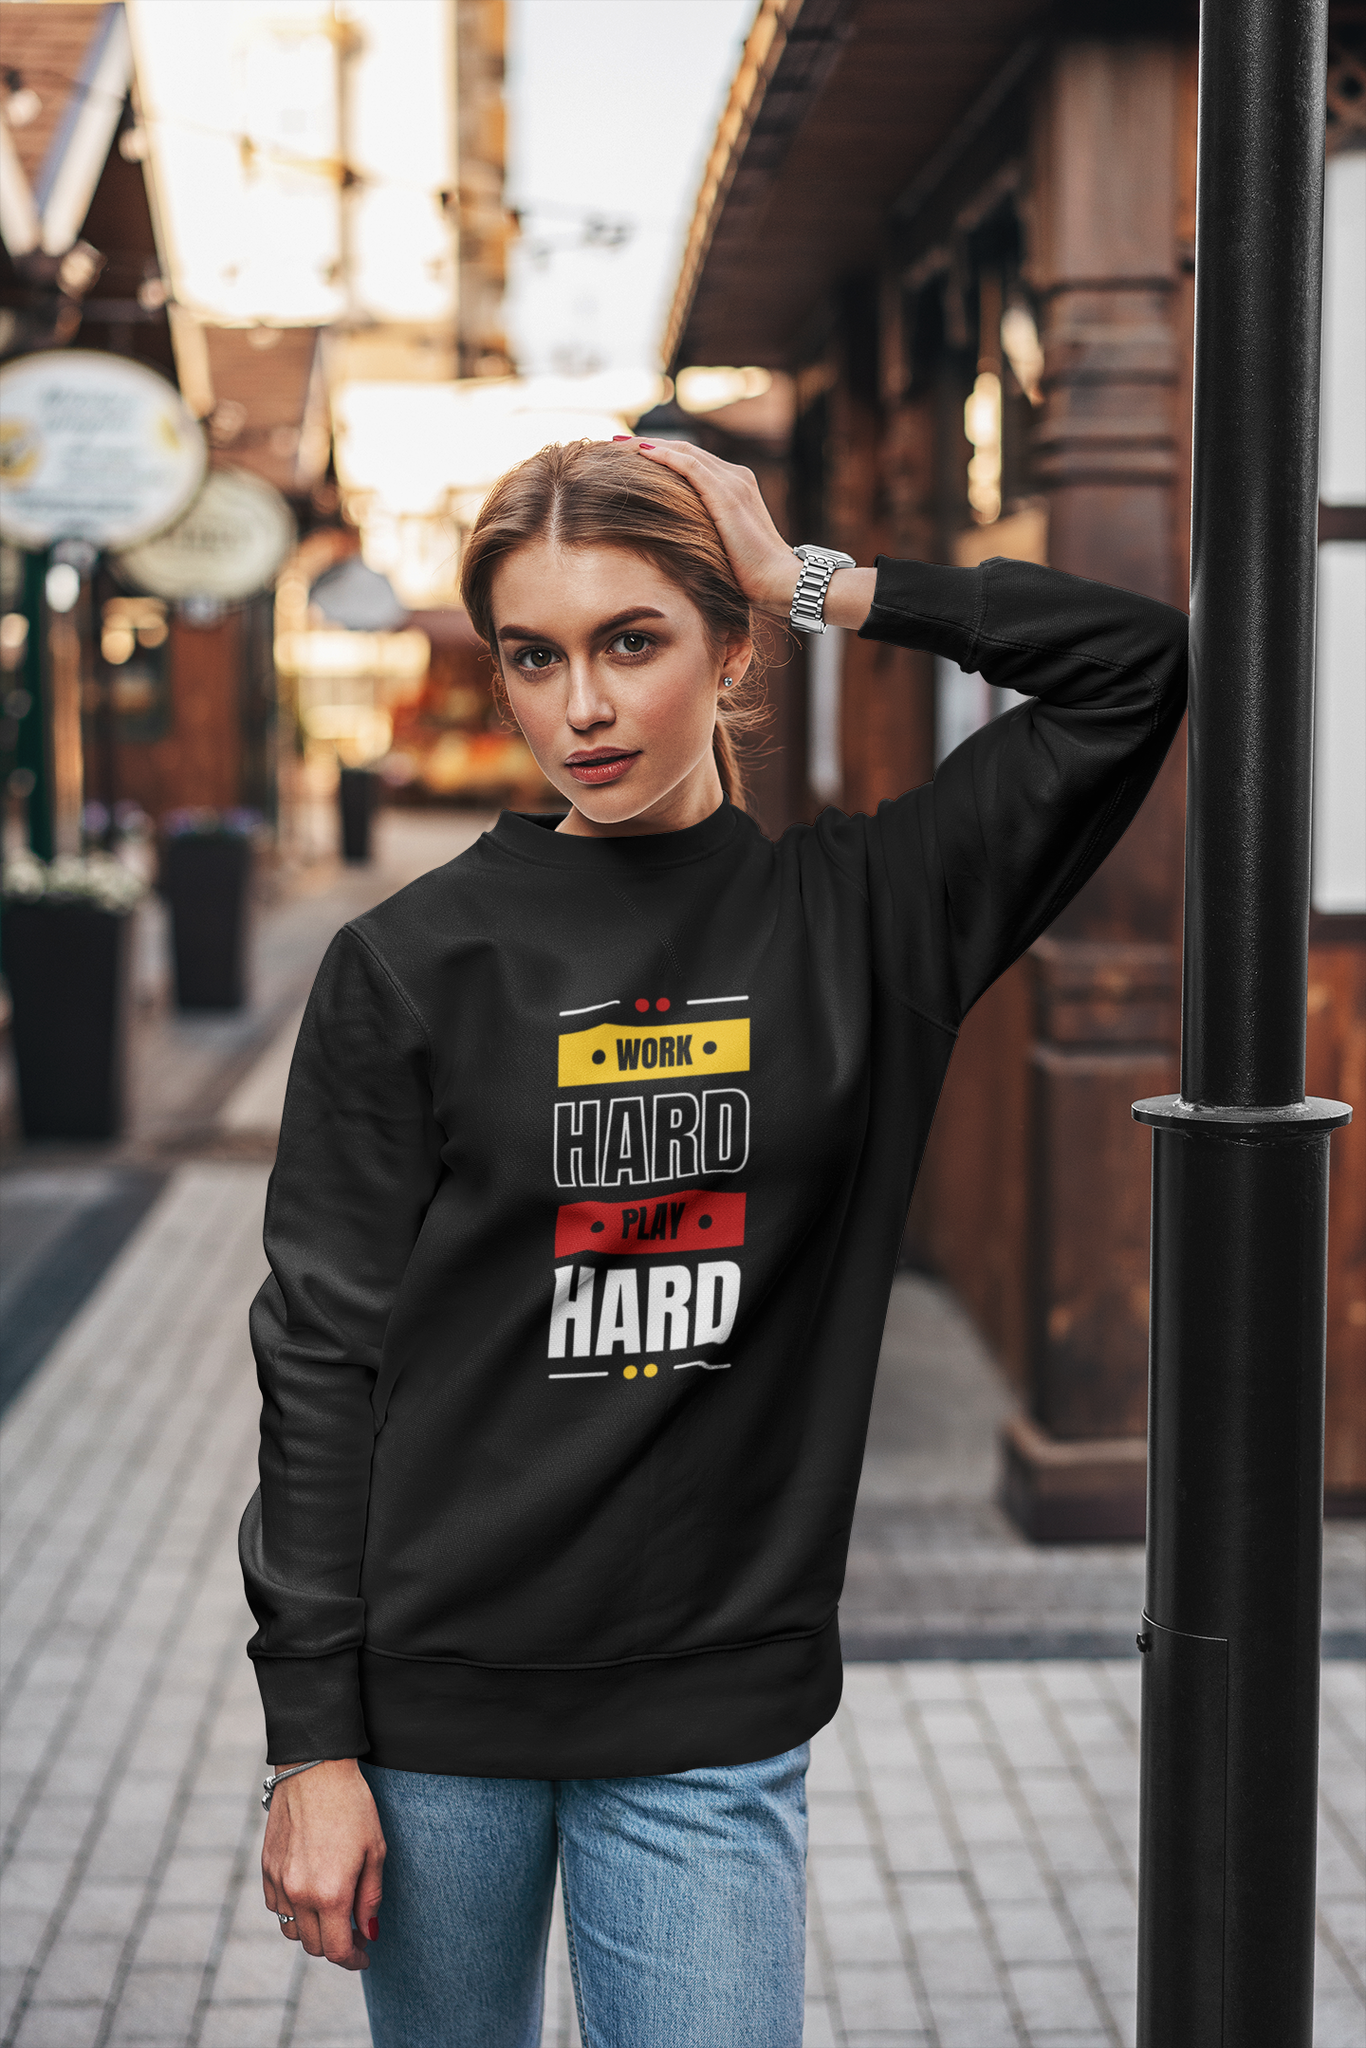 Work Hard Play Hard Sweatshirt. Unika Motiv & Texter som du uteslutande bara hittar hos Statements Clothing